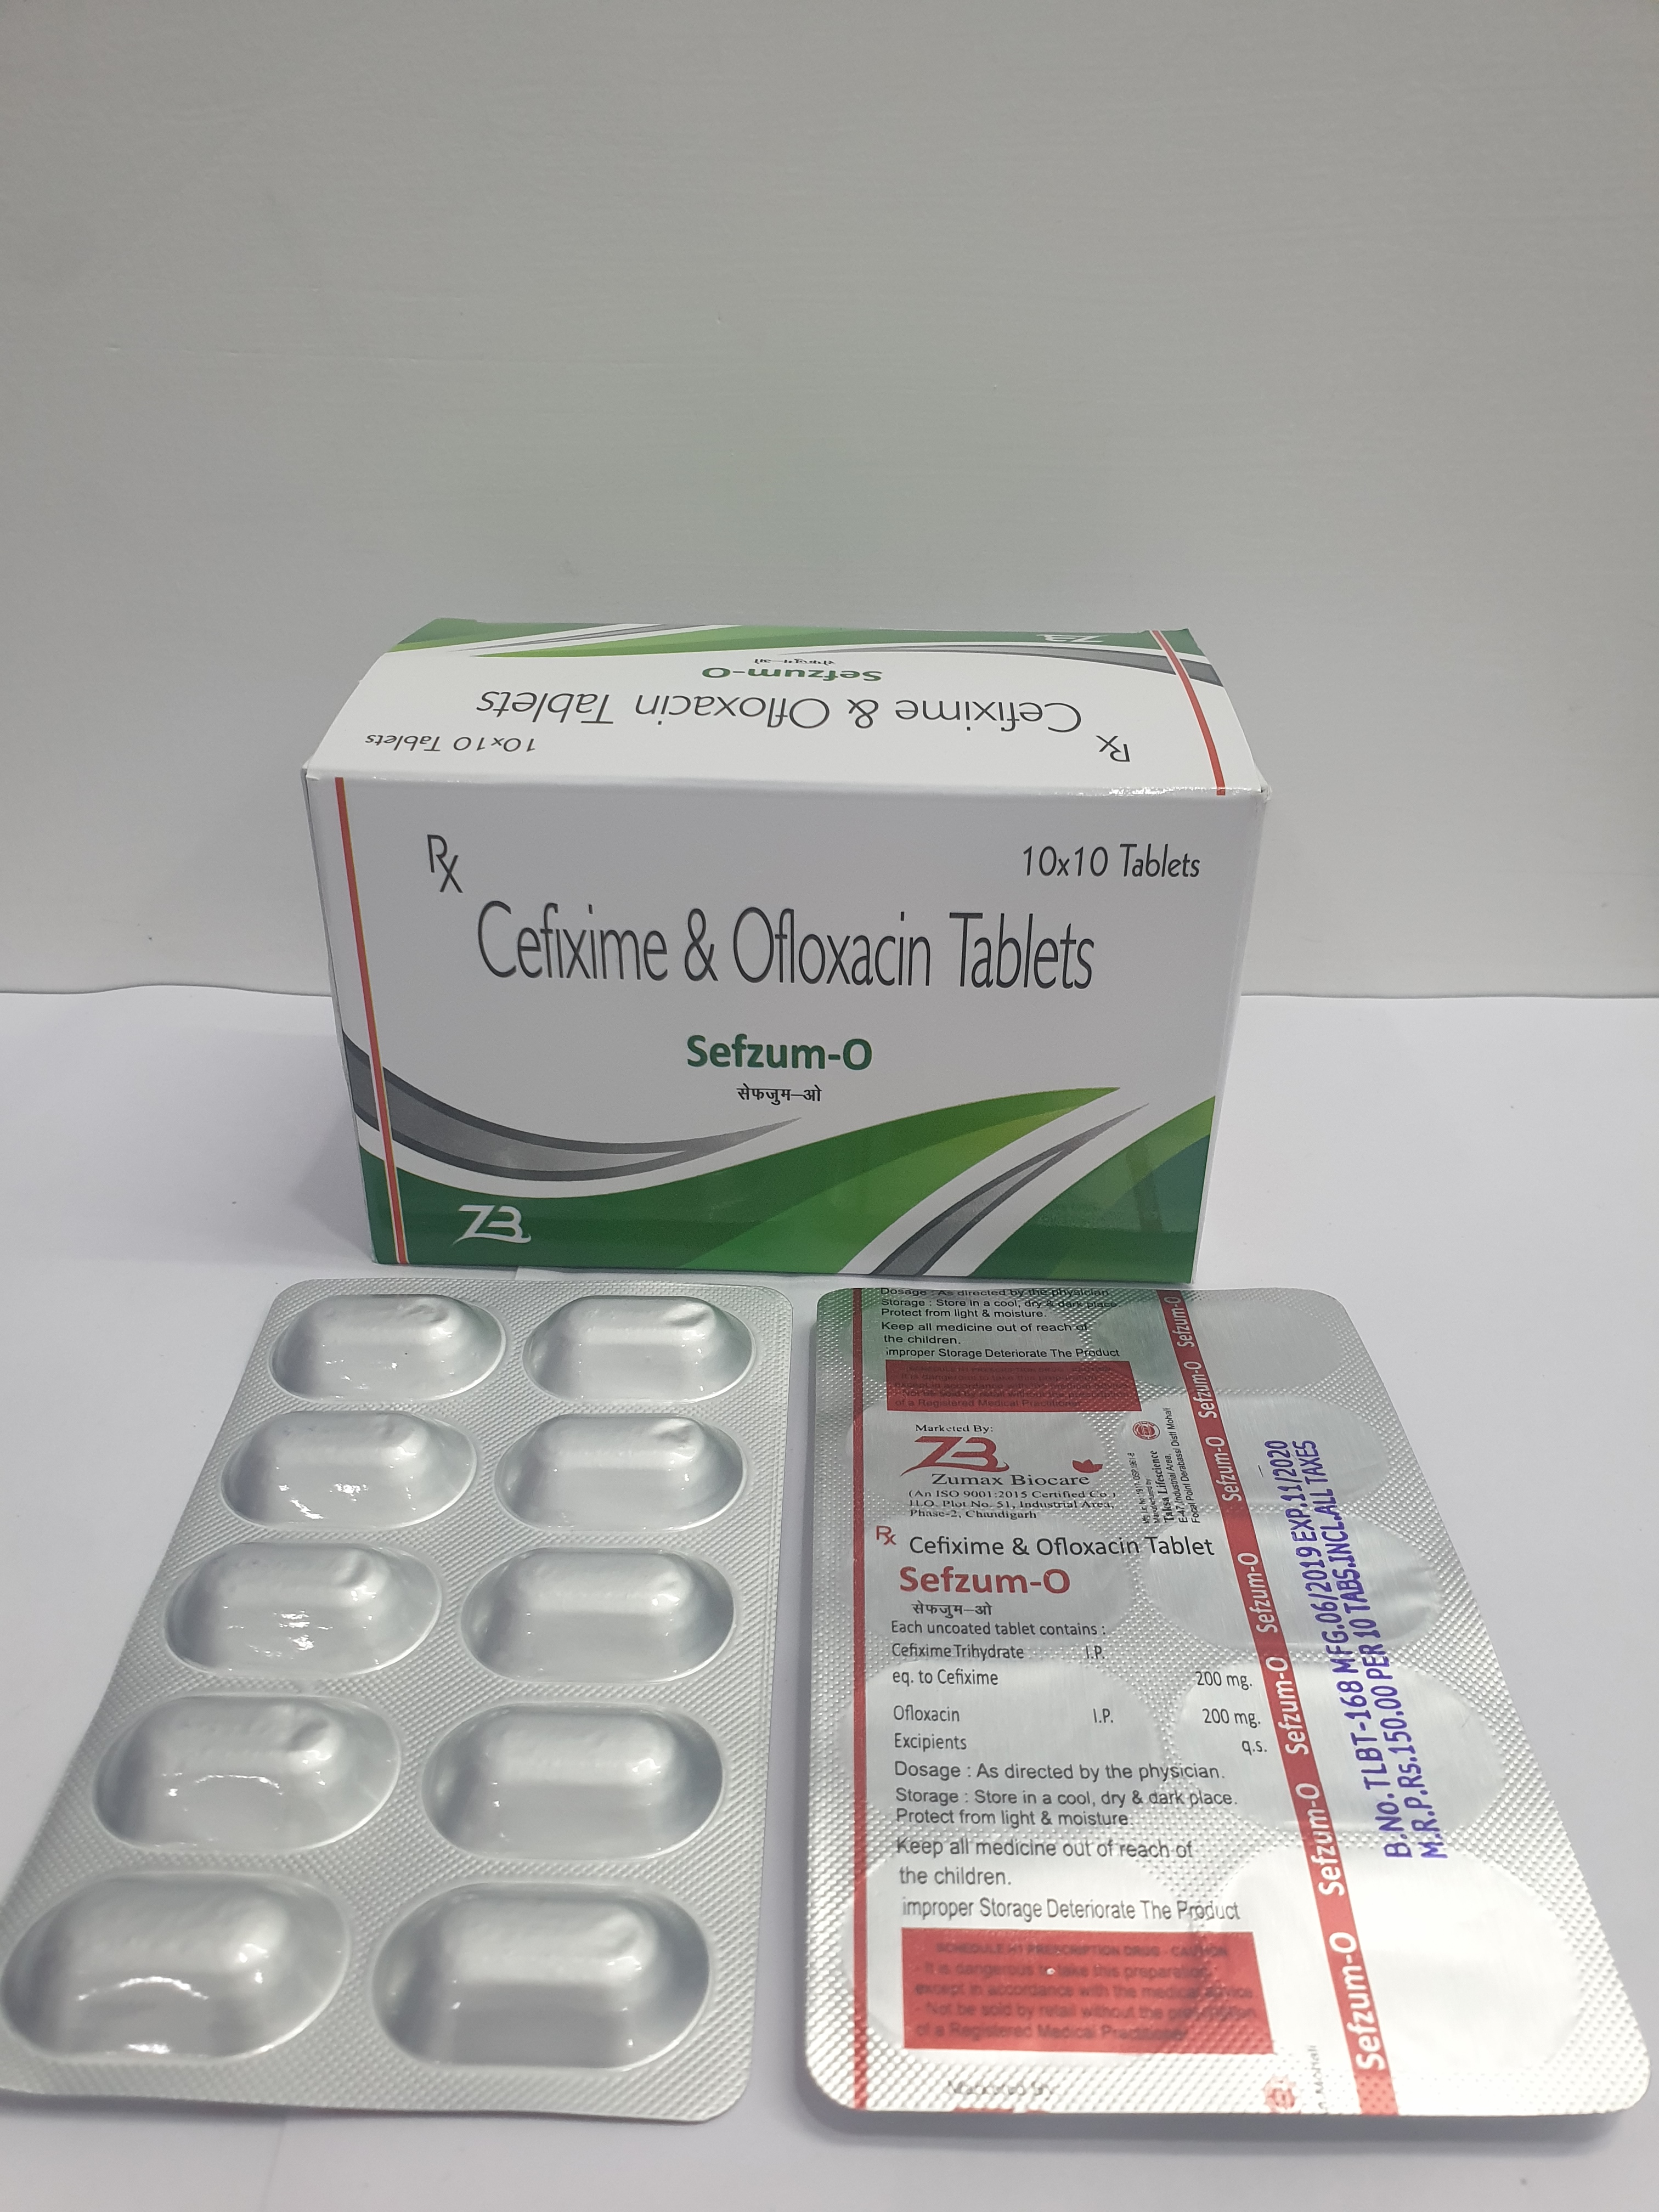 Product Name: Sefzum O, Compositions of Sefzum O are Cefixime & ofloxacin Tablets - Zumax Biocare